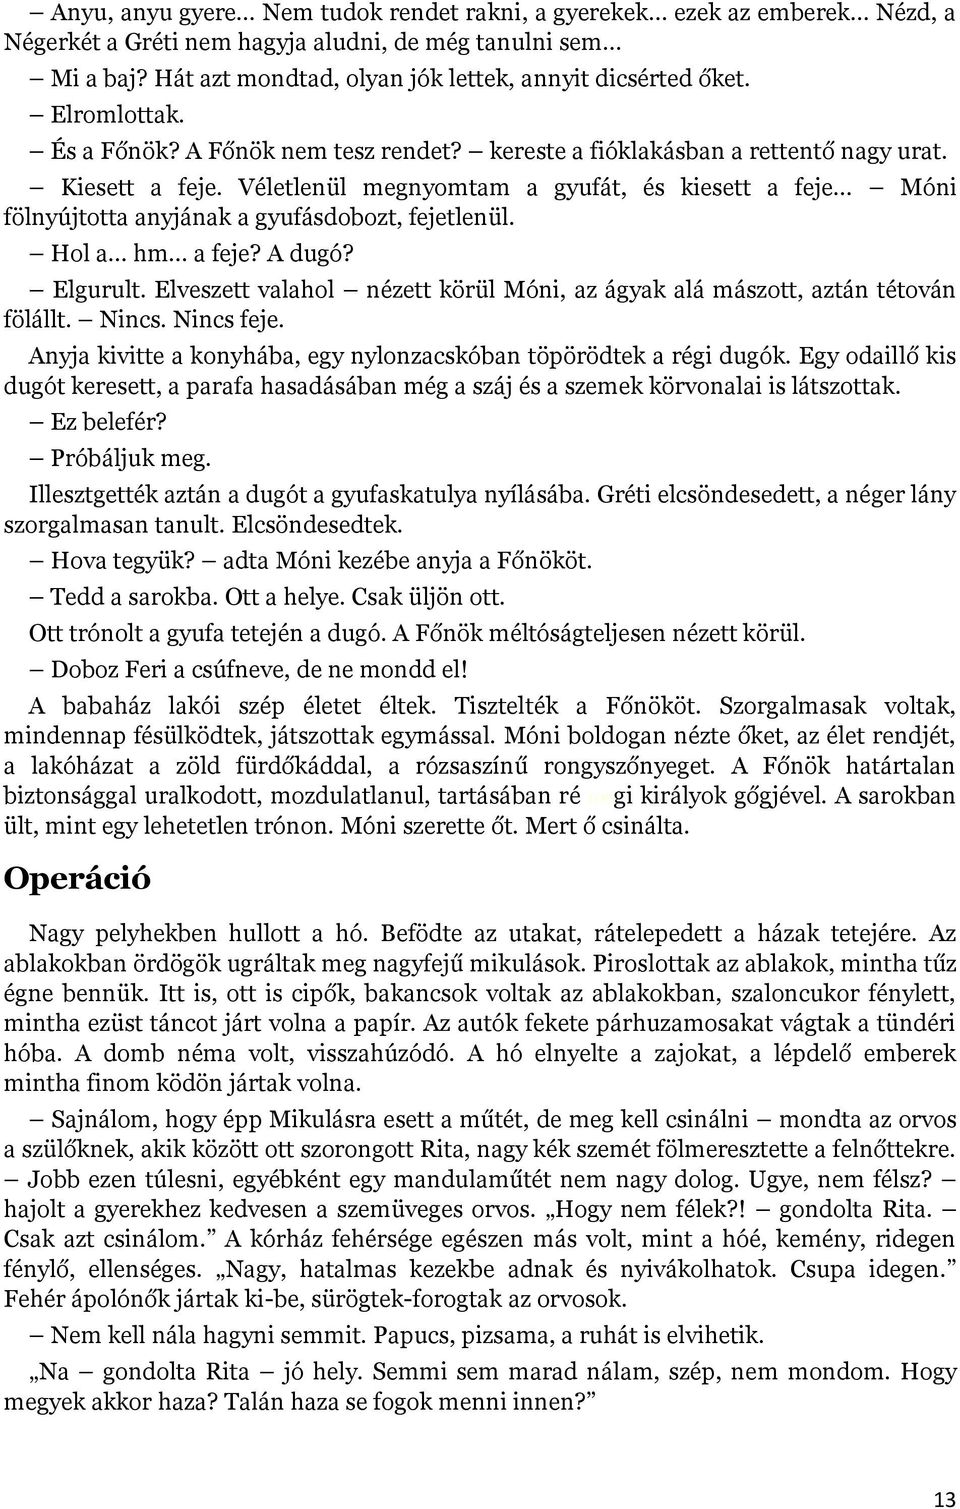 Gyurkovics Tibor: Üveggolyó - PDF Free Download